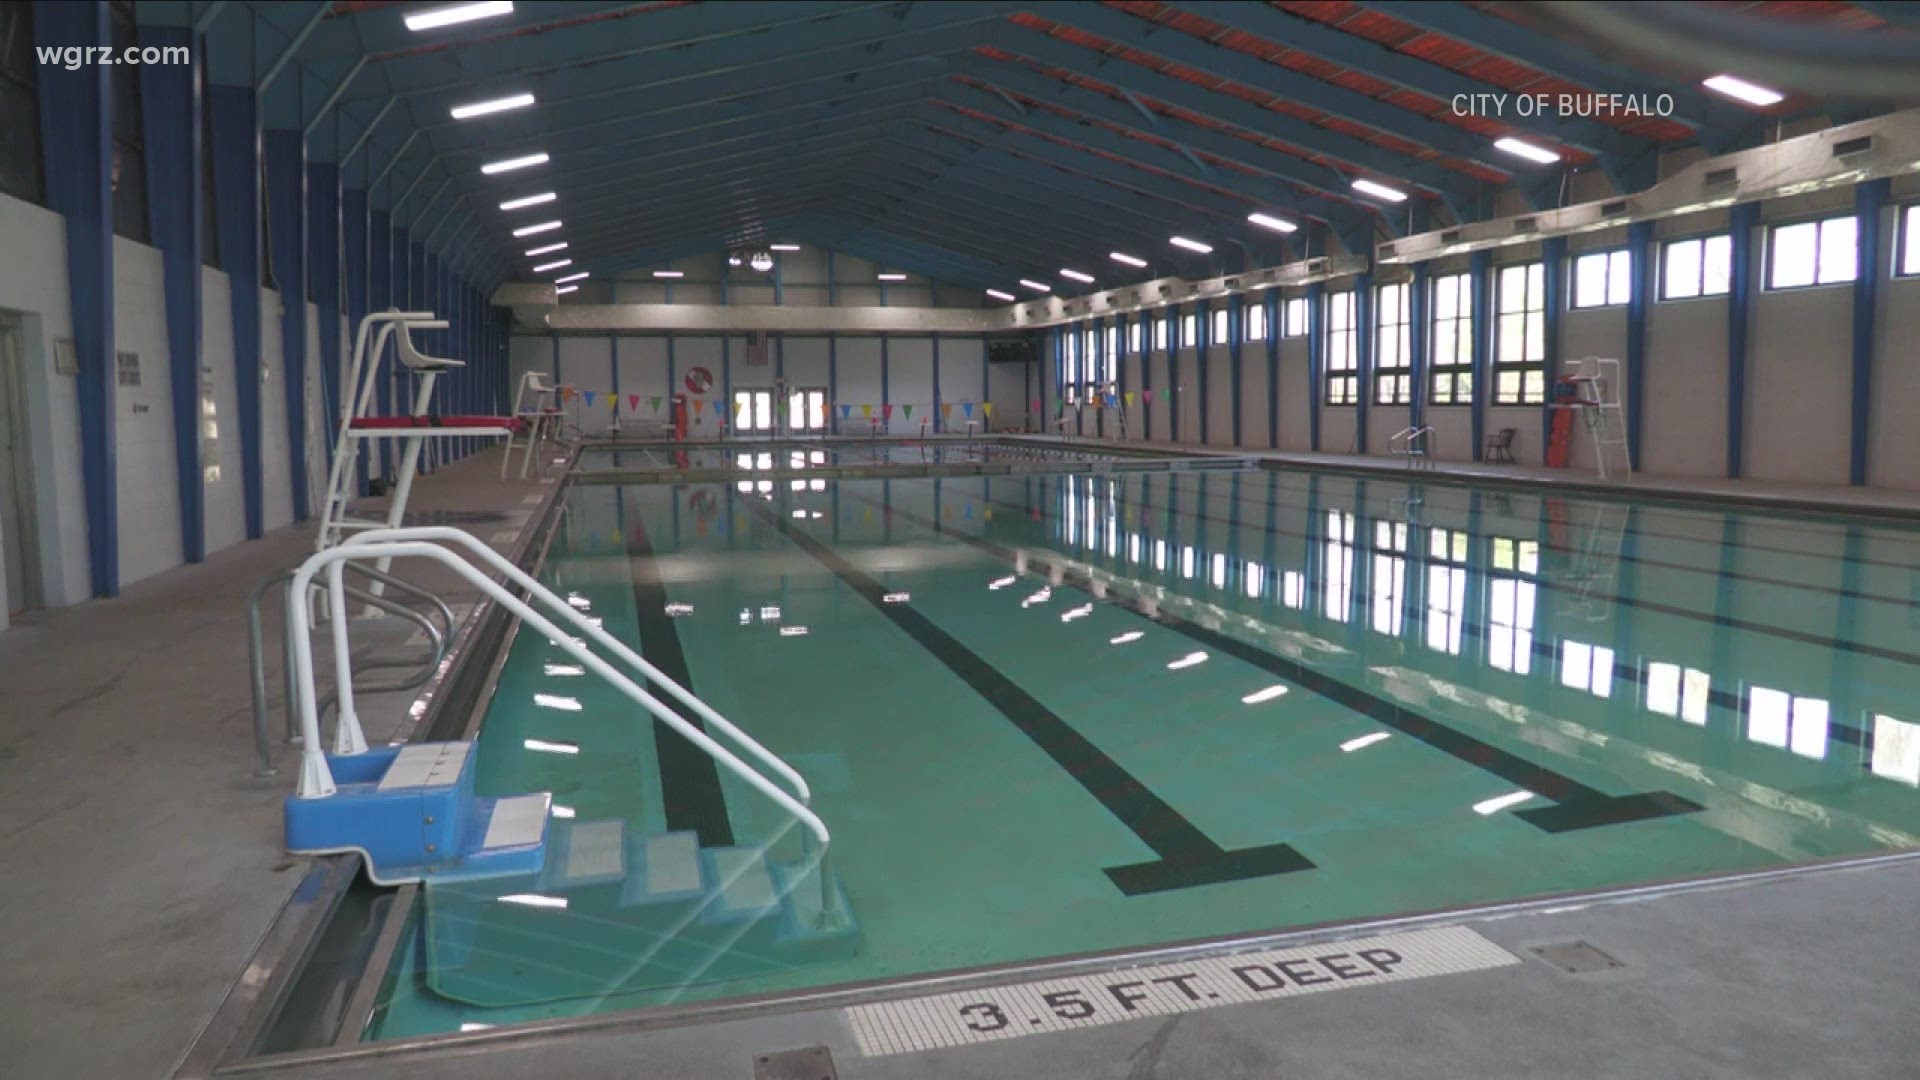 2 city of Buffalo indoor public pools open Monday